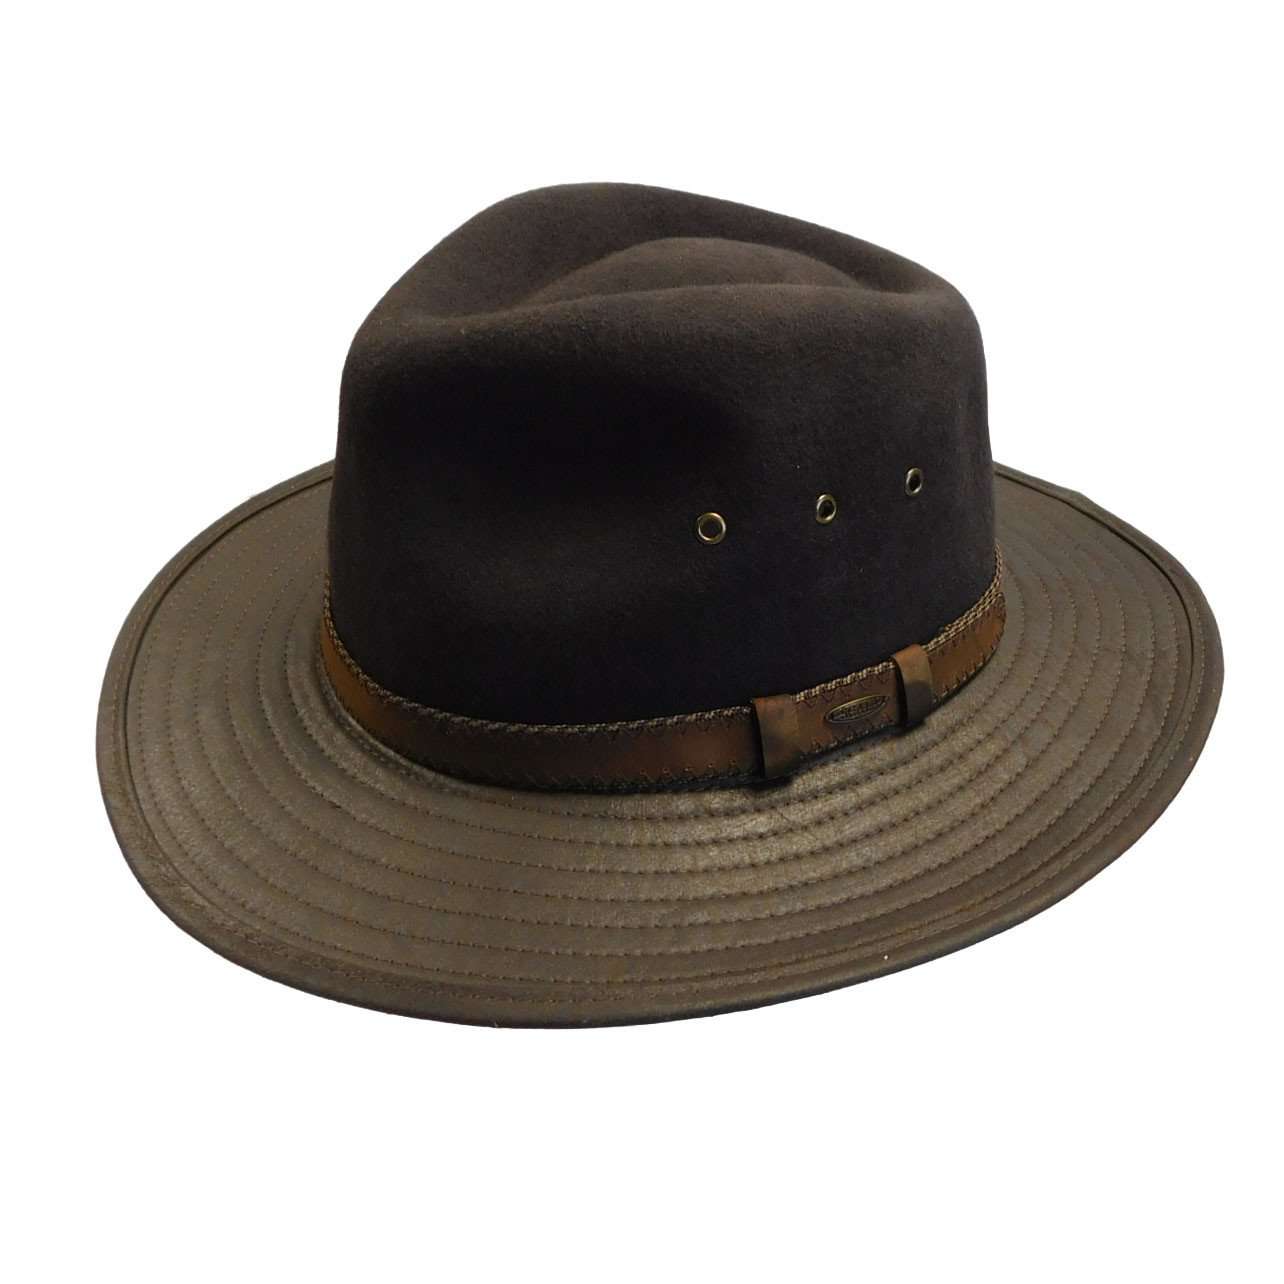 Men's Scala Cotton Blend Outback Hat - Brown